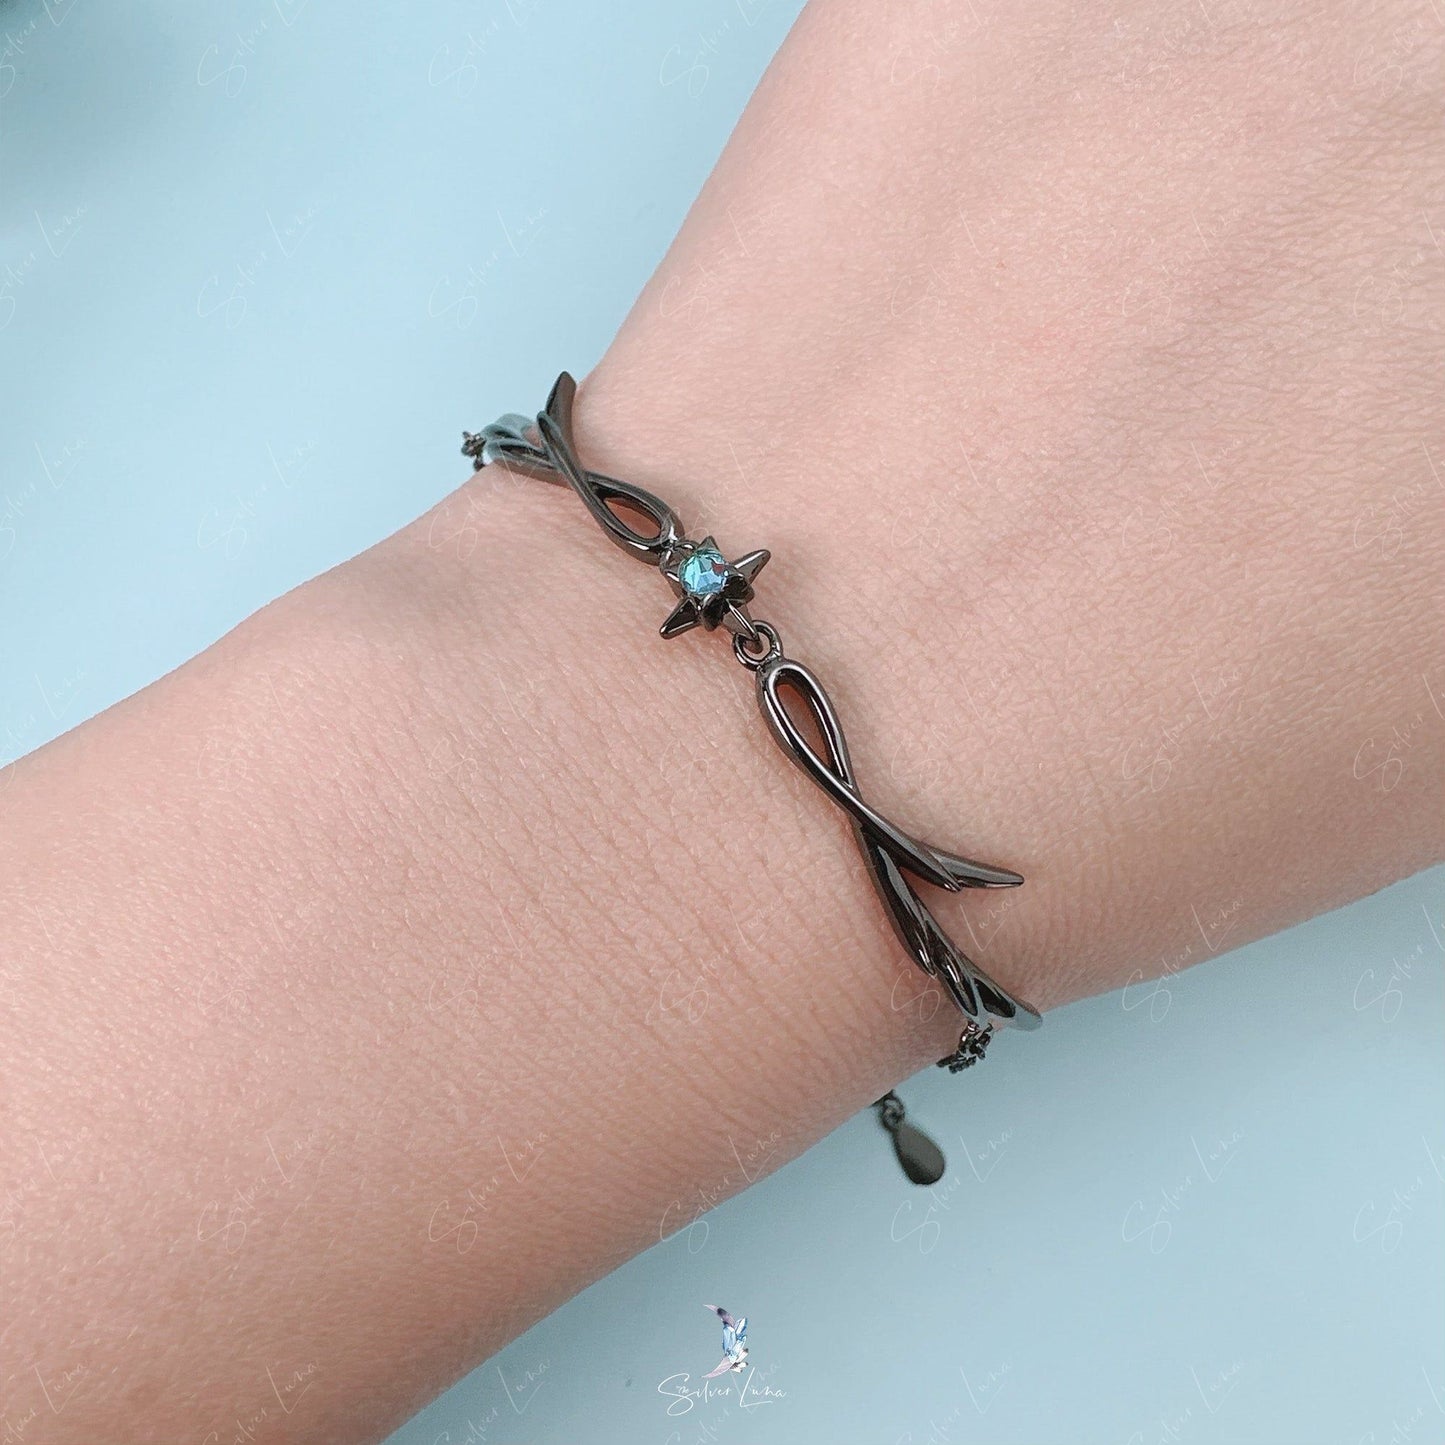 Black tree branch with blue star bracelet